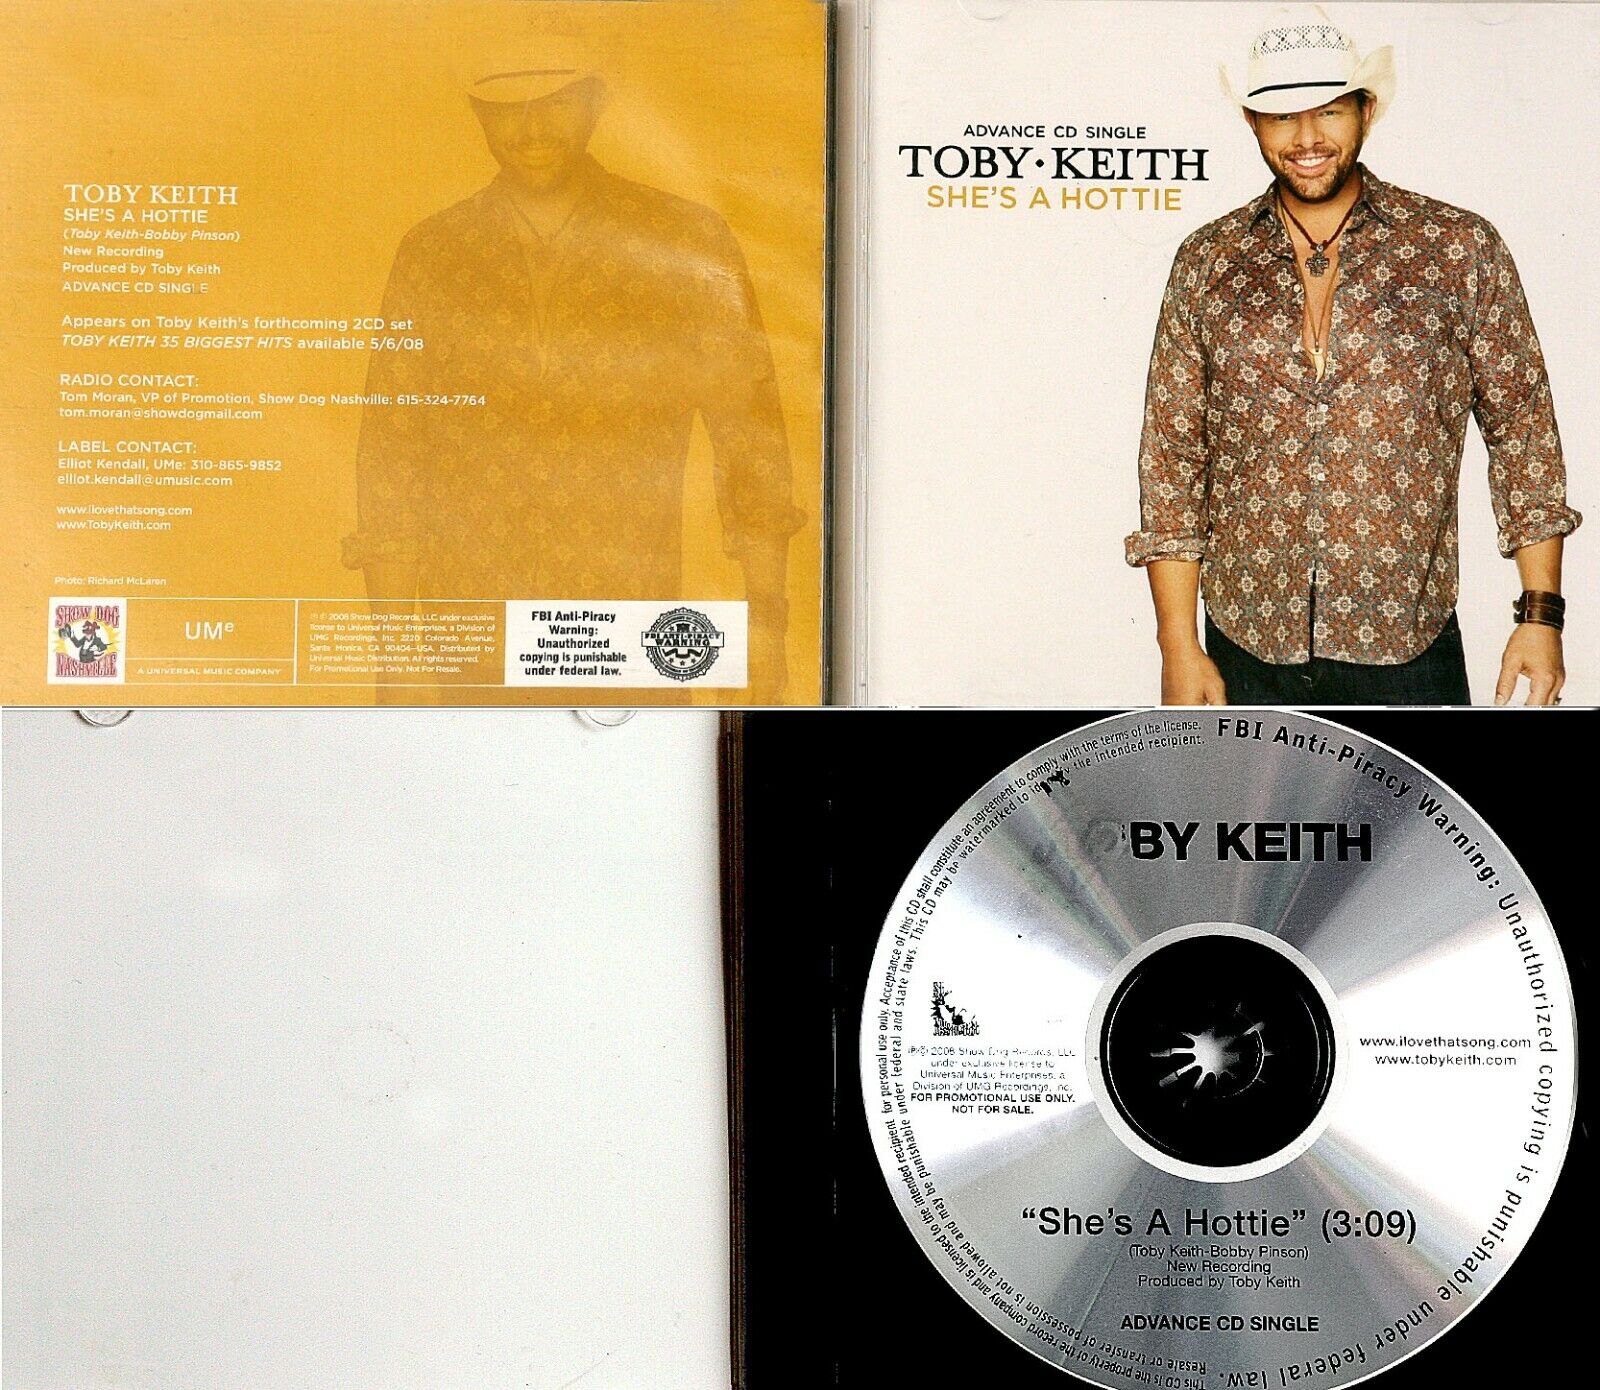 KEITH TOBY *VG* "SHE'S A HOTTIE" 2008 US SHOW DOG PROMO ADVANCE CD SINGLE | eBay